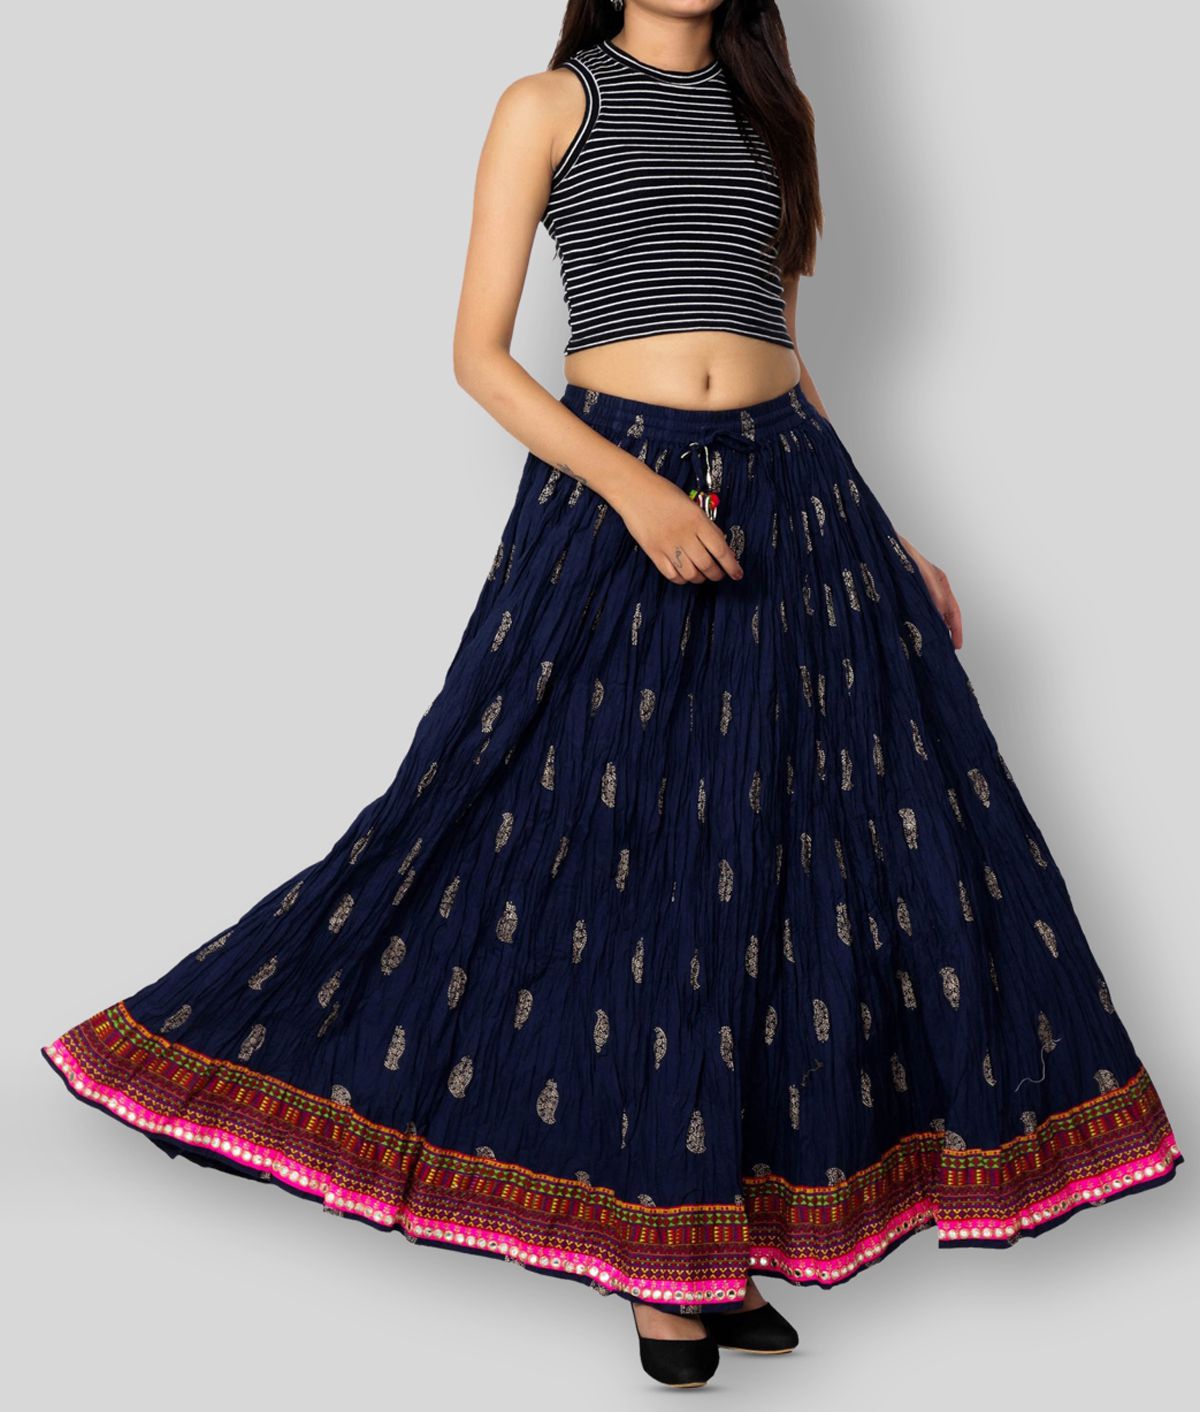     			FABRR - Multicolor Cotton Women's A-Line Skirt ( Pack of 1 )